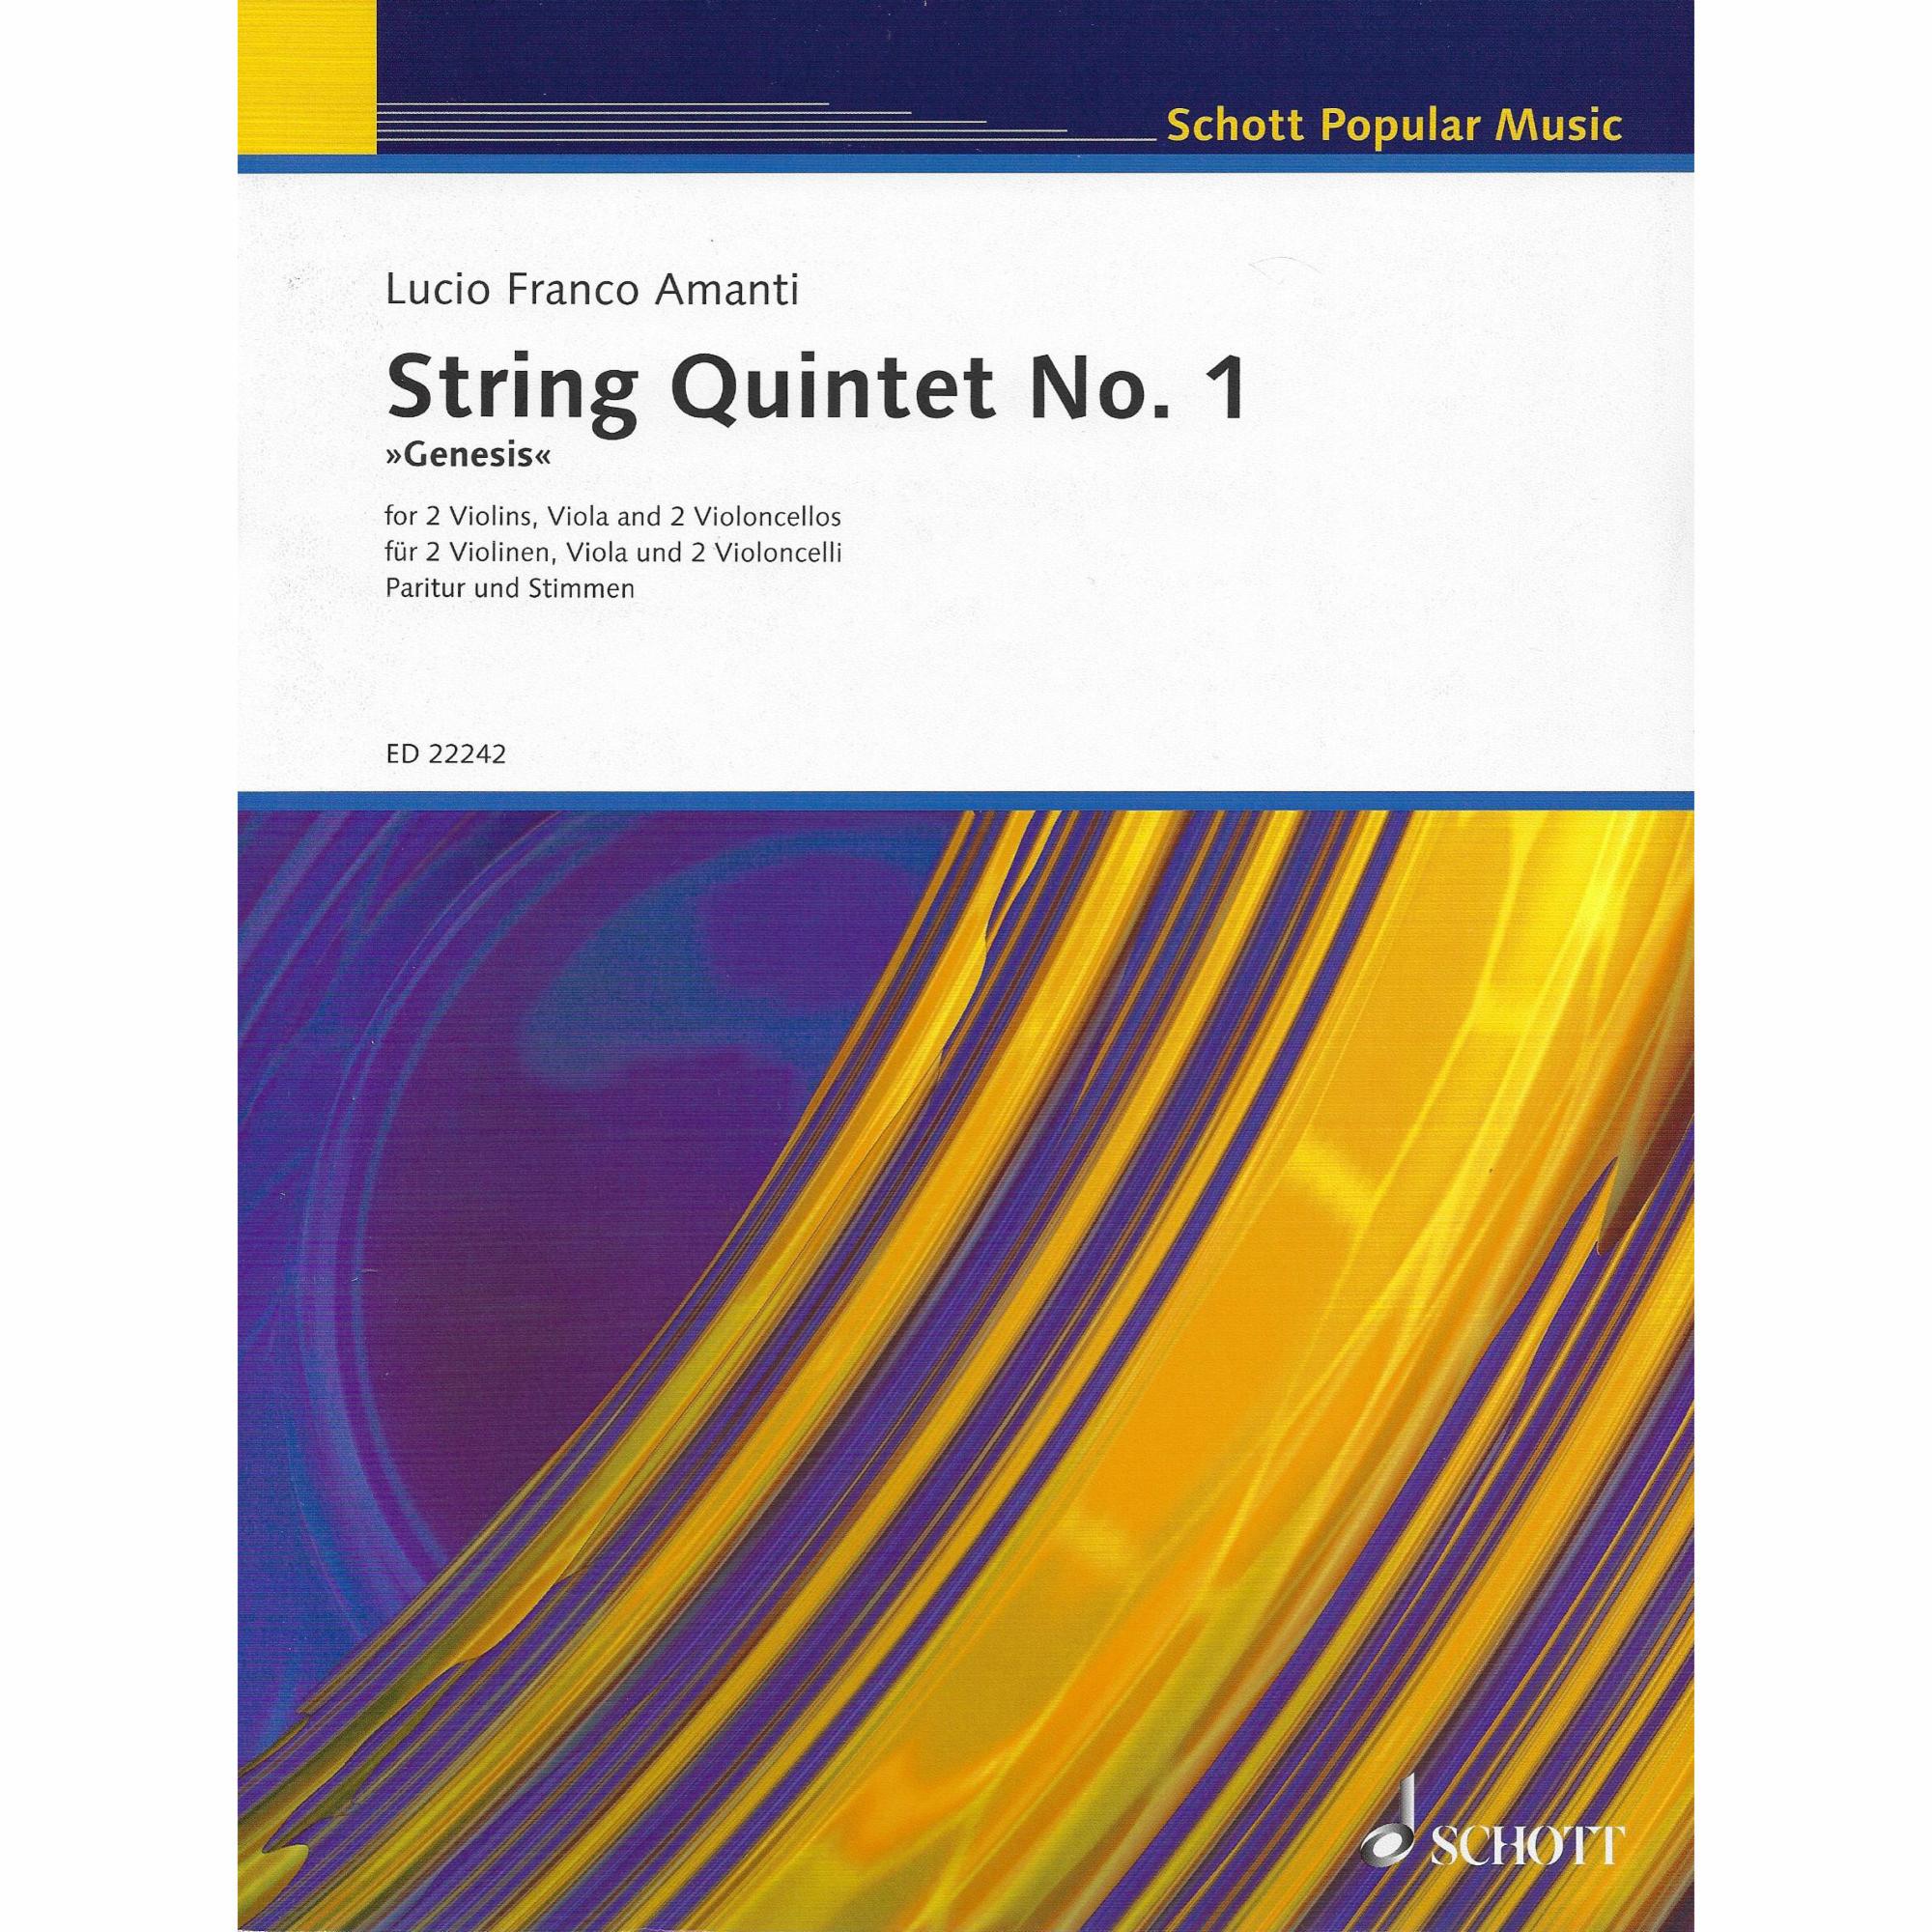 Amanti -- String Quintet No. 1 (Genesis)